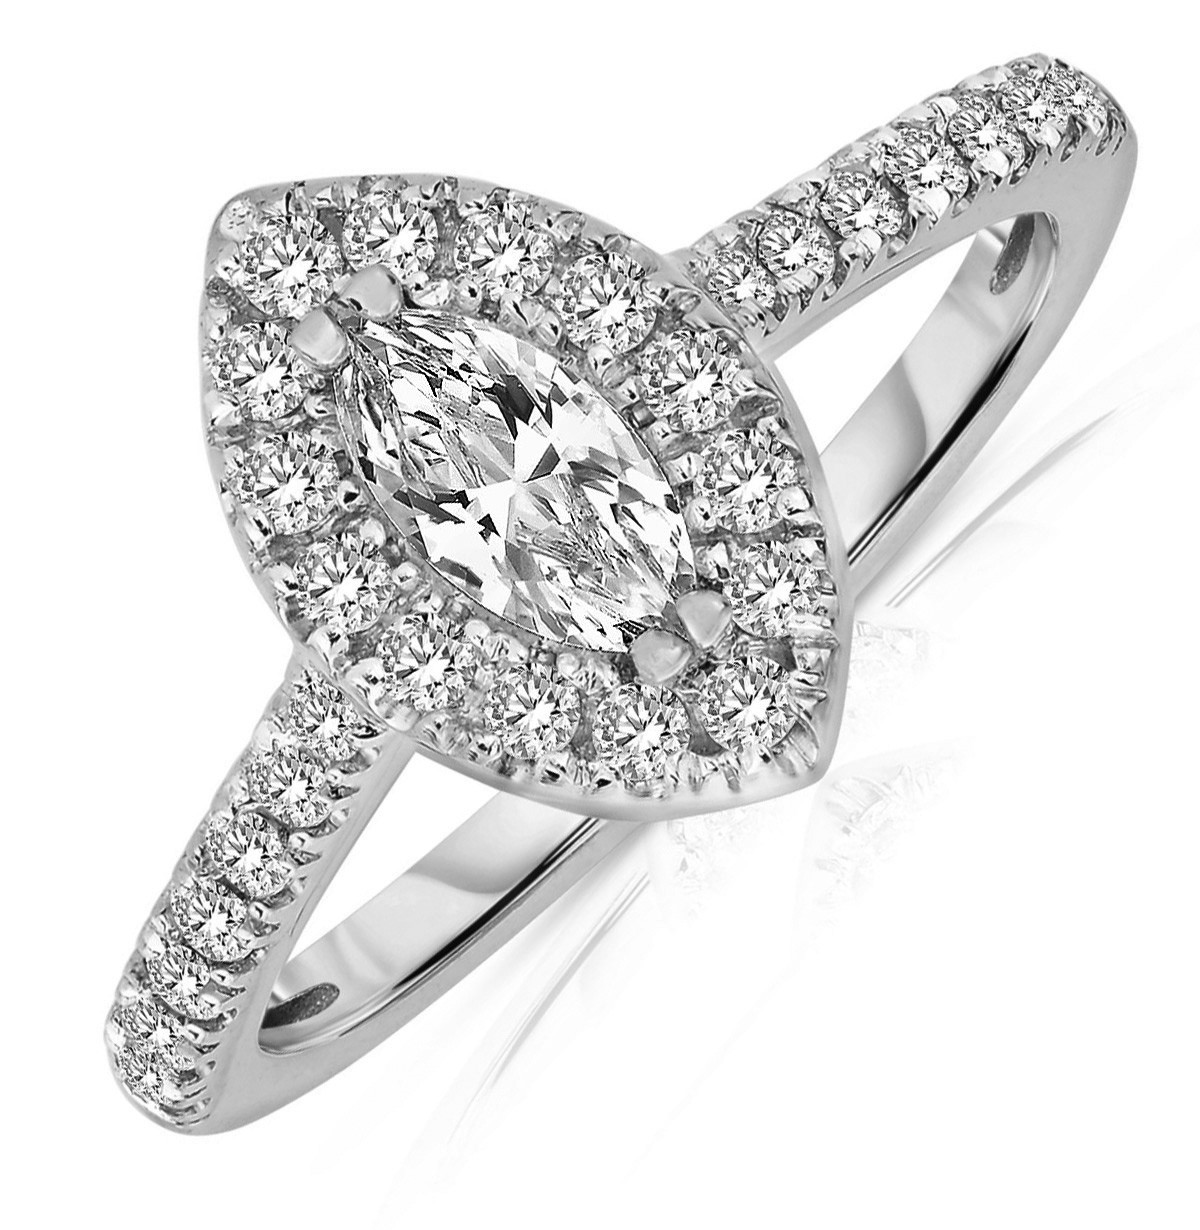 Marquise Diamond Engagement Rings
 Half Carat Marquise cut Halo Diamond Engagement Ring in